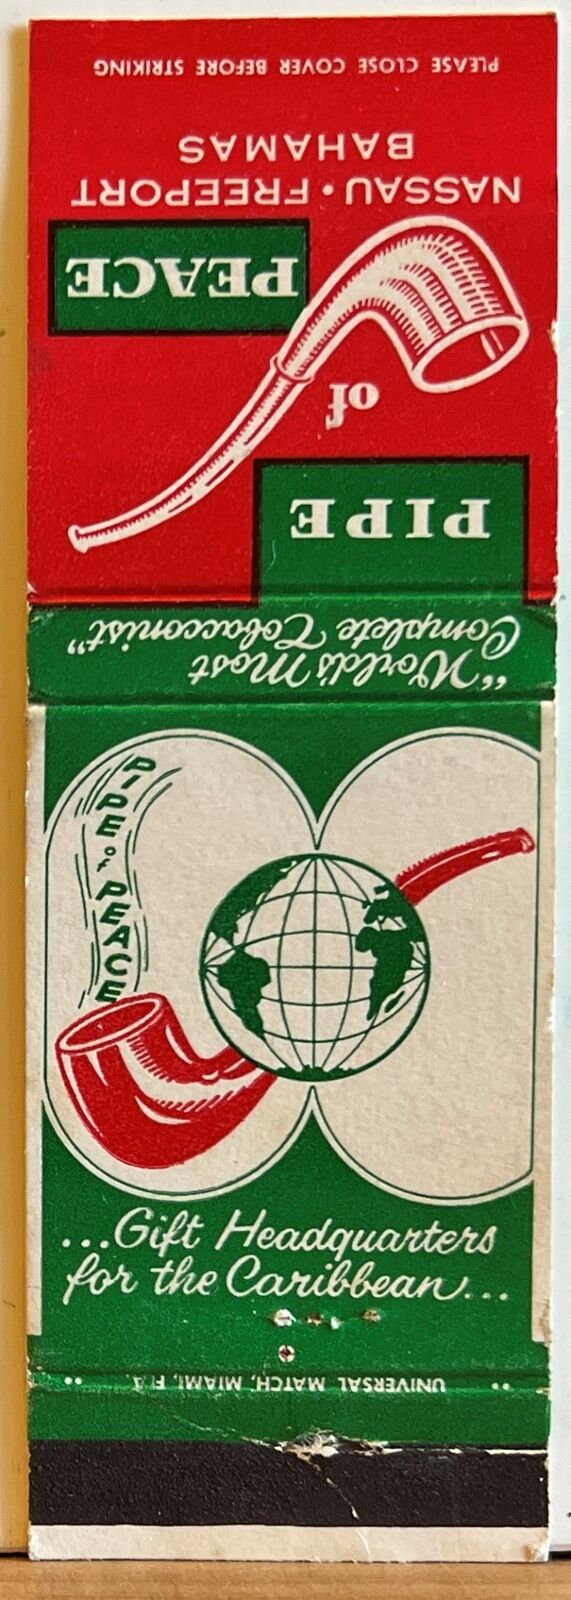 Pipe of Peace Nassau Freeport Bahamas Tobacconist Vintage Matchbook Cover